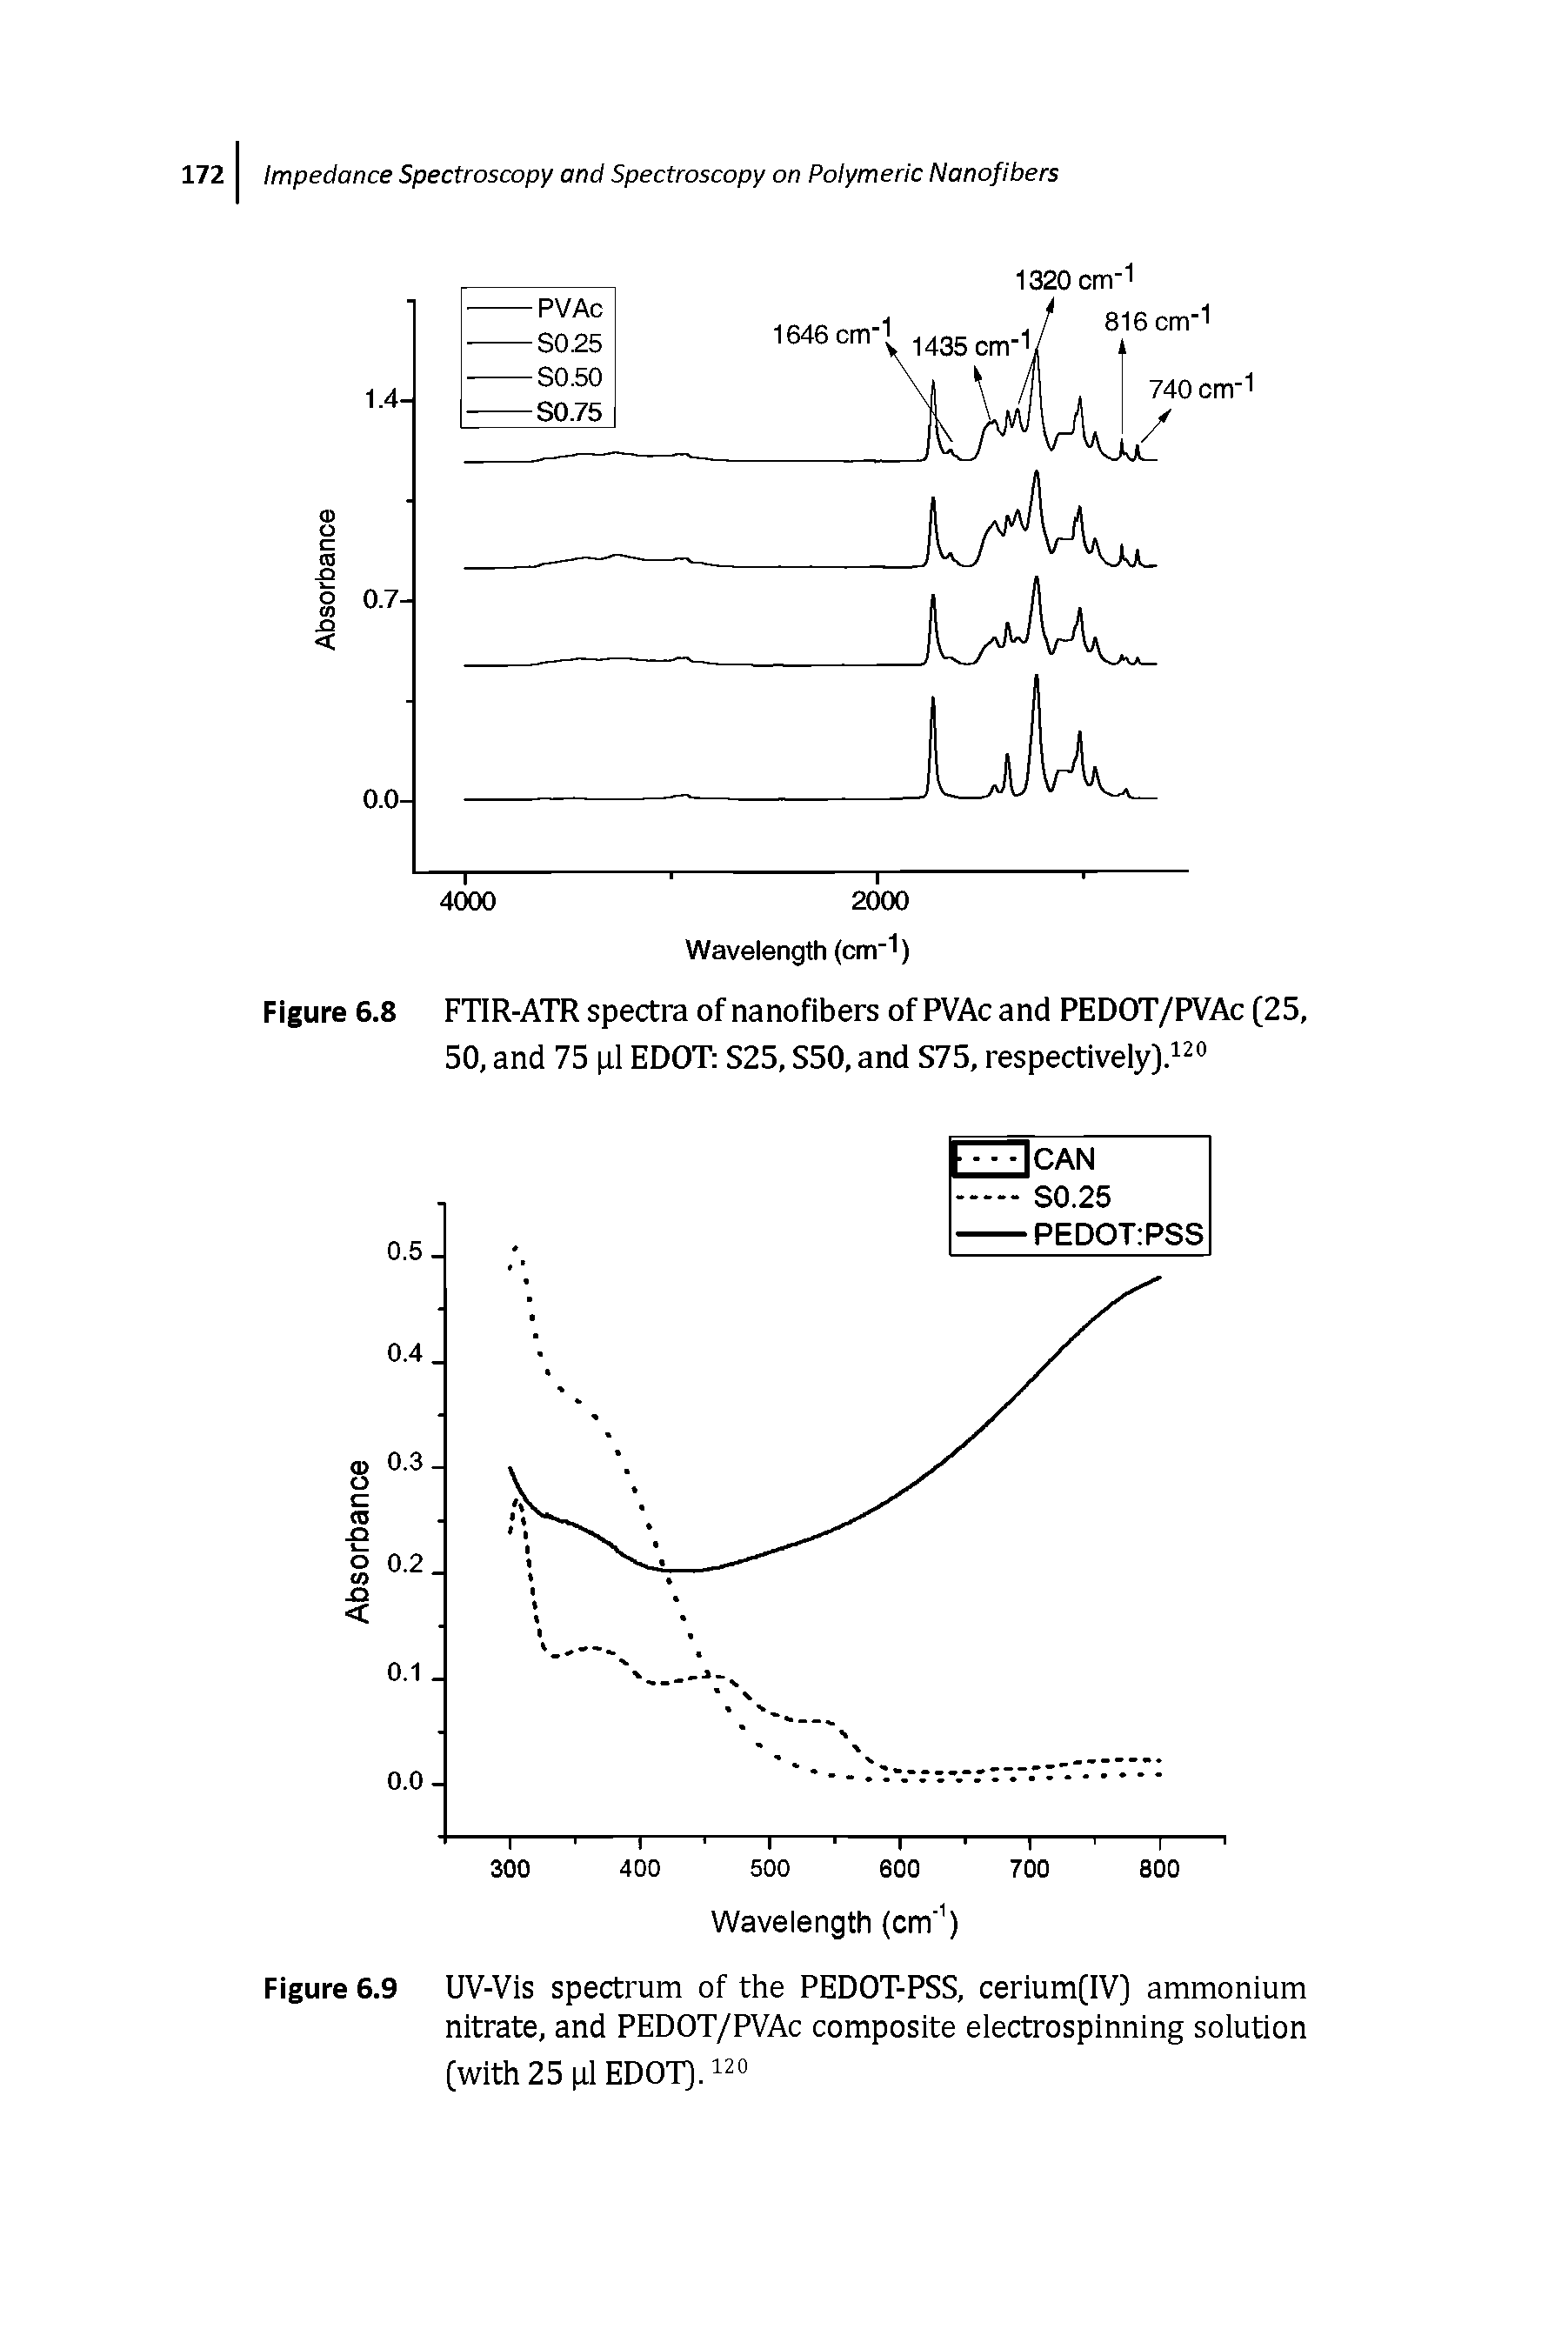 Figure 6.9 UV-Vis spectrum of the PEDOT-PSS, cerlum(IV) ammonium nitrate, and PEDOT/PVAc composite electrospinning solution (with 25 pi EDOT). 120...